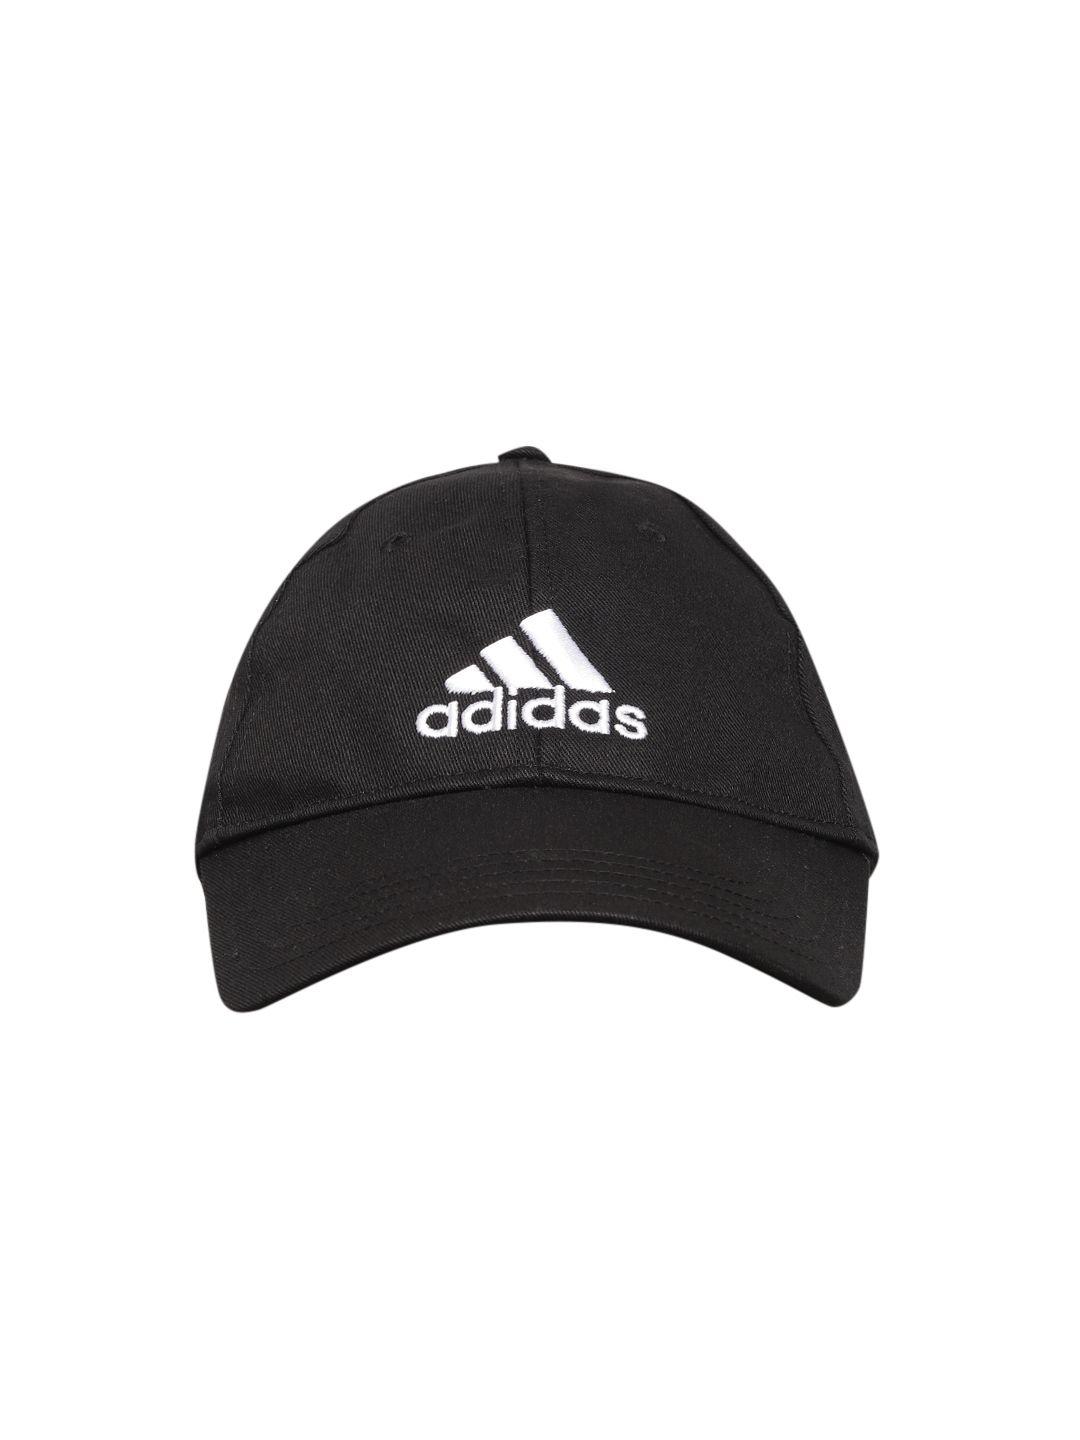 adidas men black & white baseball cap with brand logo